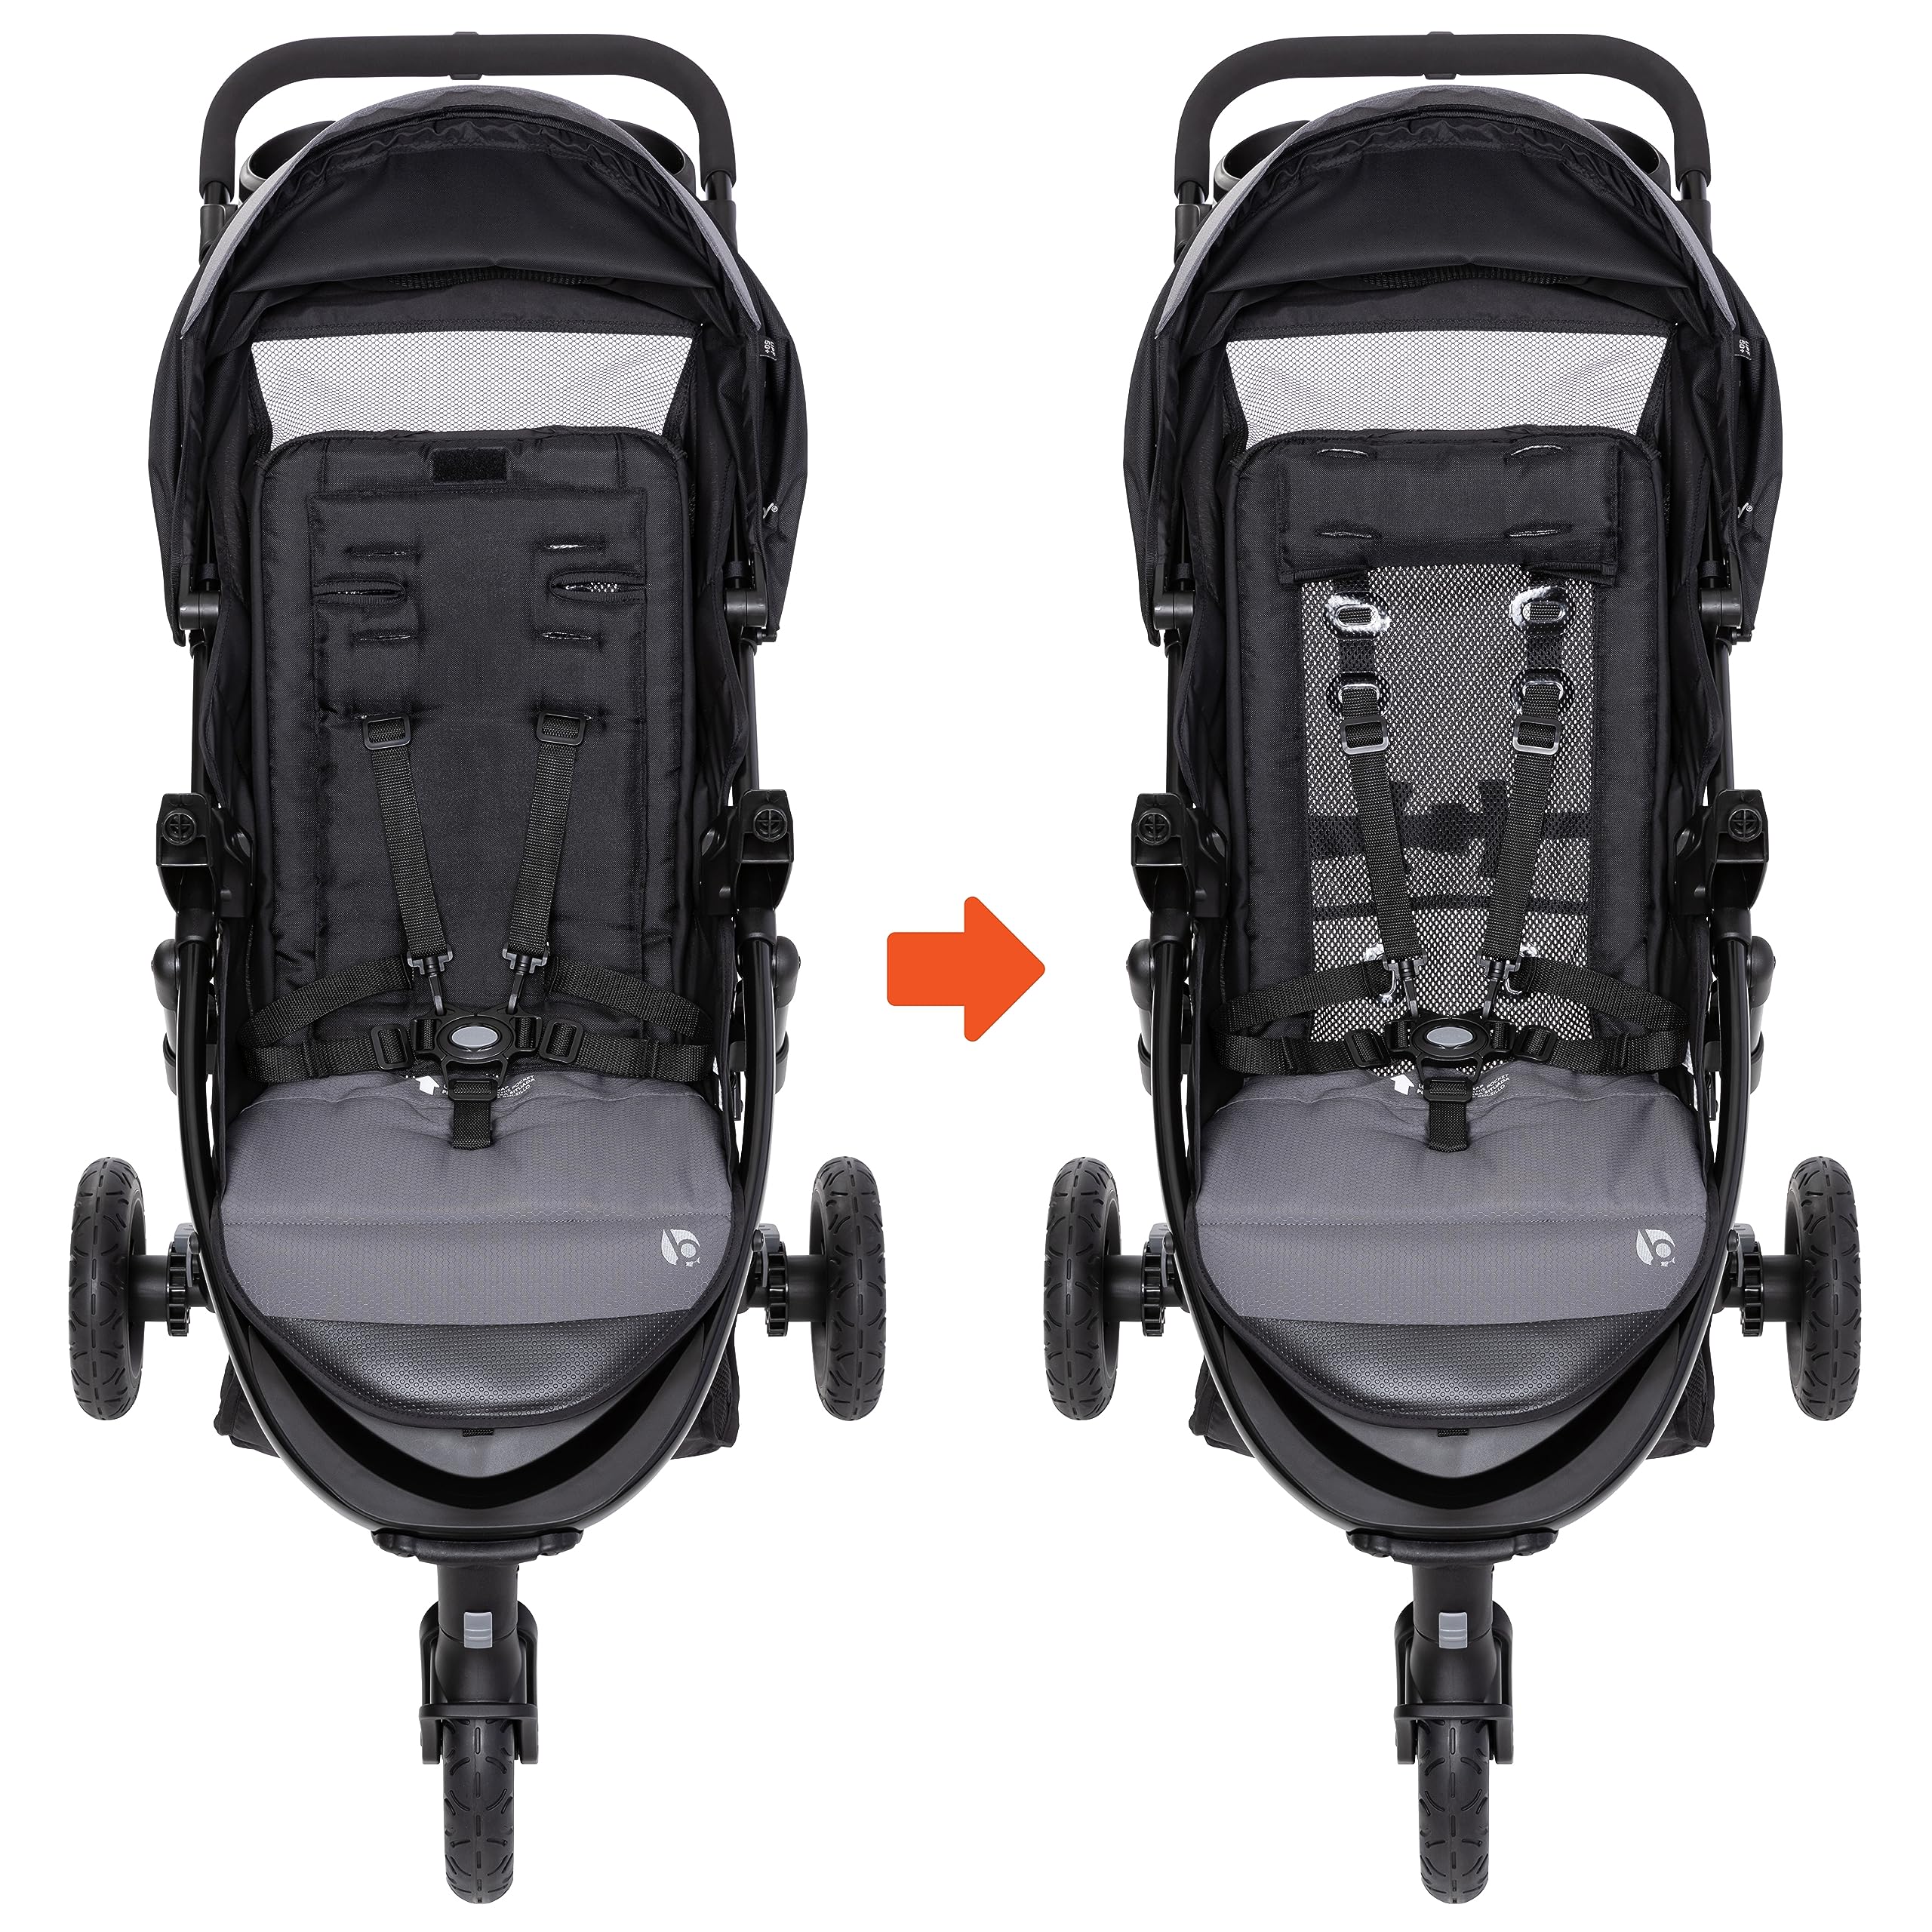 Passport Seasons All-Terrain Travel System with EZ-Lift Plus Infant Car Seat